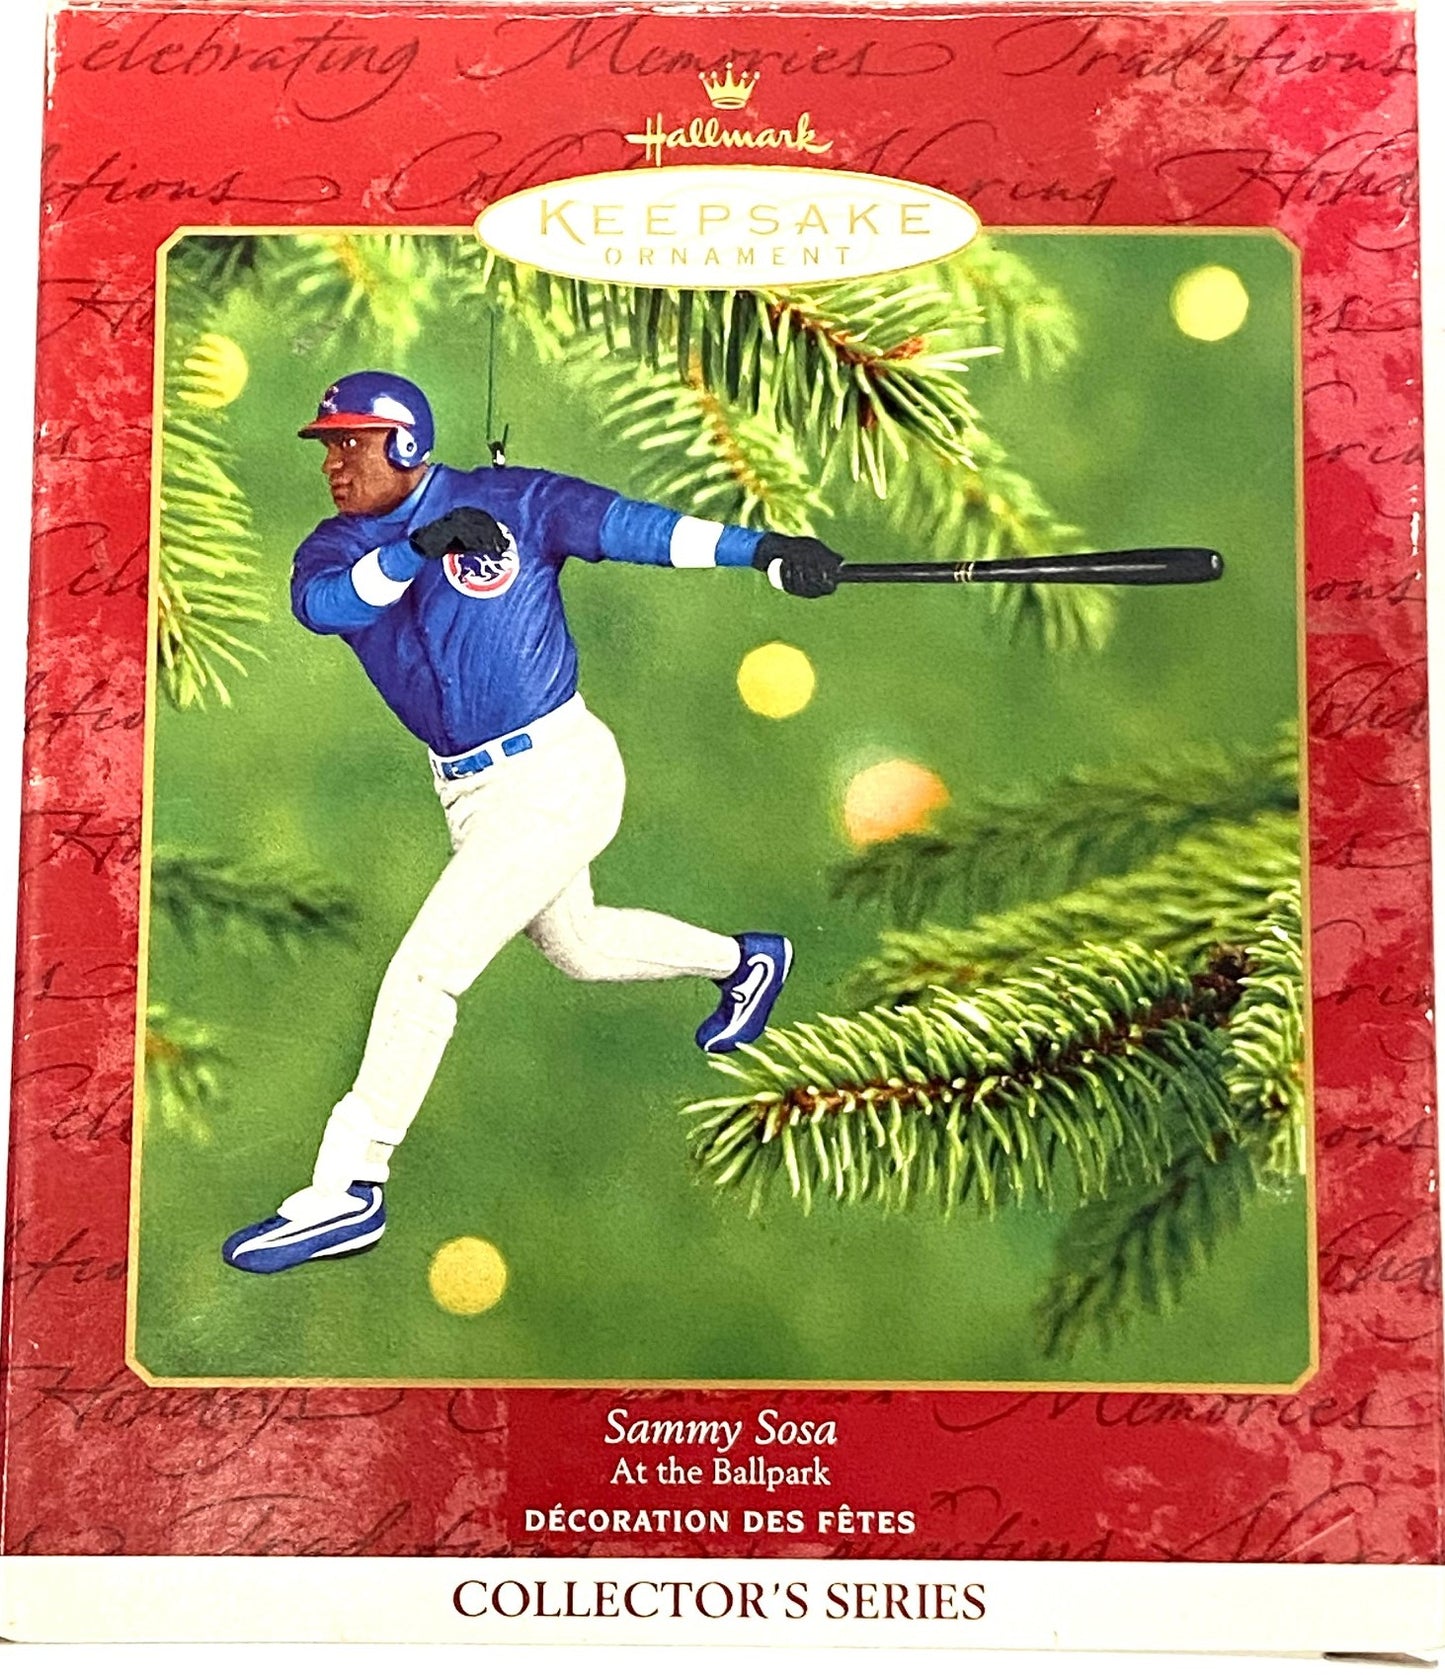 Sammy Sosa 2001 MLB Chicago Cubs Keepsake Ornament Used by Hallmark